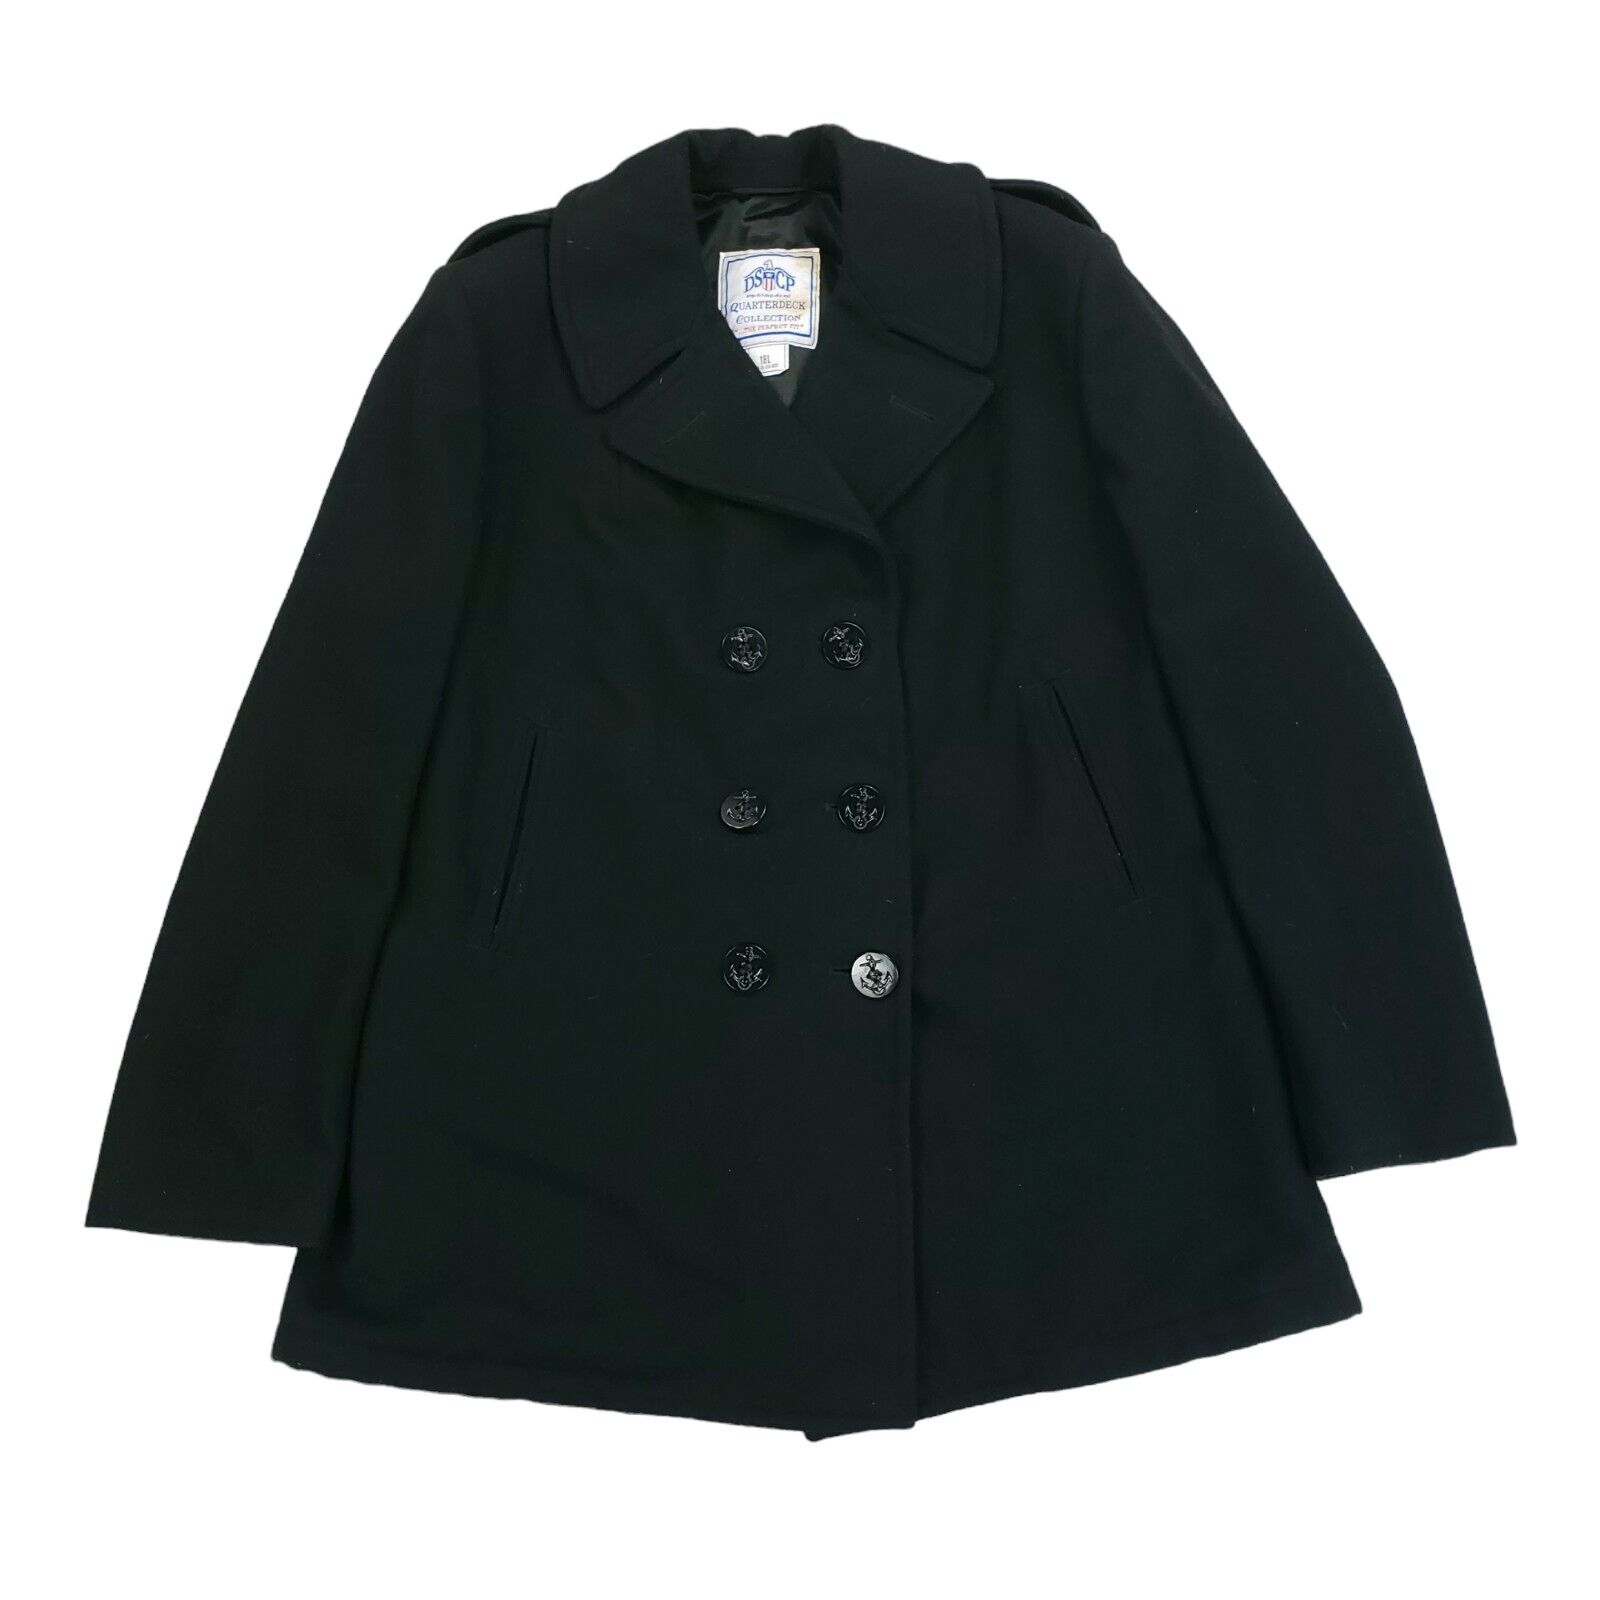 DSCP Quarterdeck US Navy Wool Pea Coat Military Overcoat Jacket Womens Size 18L